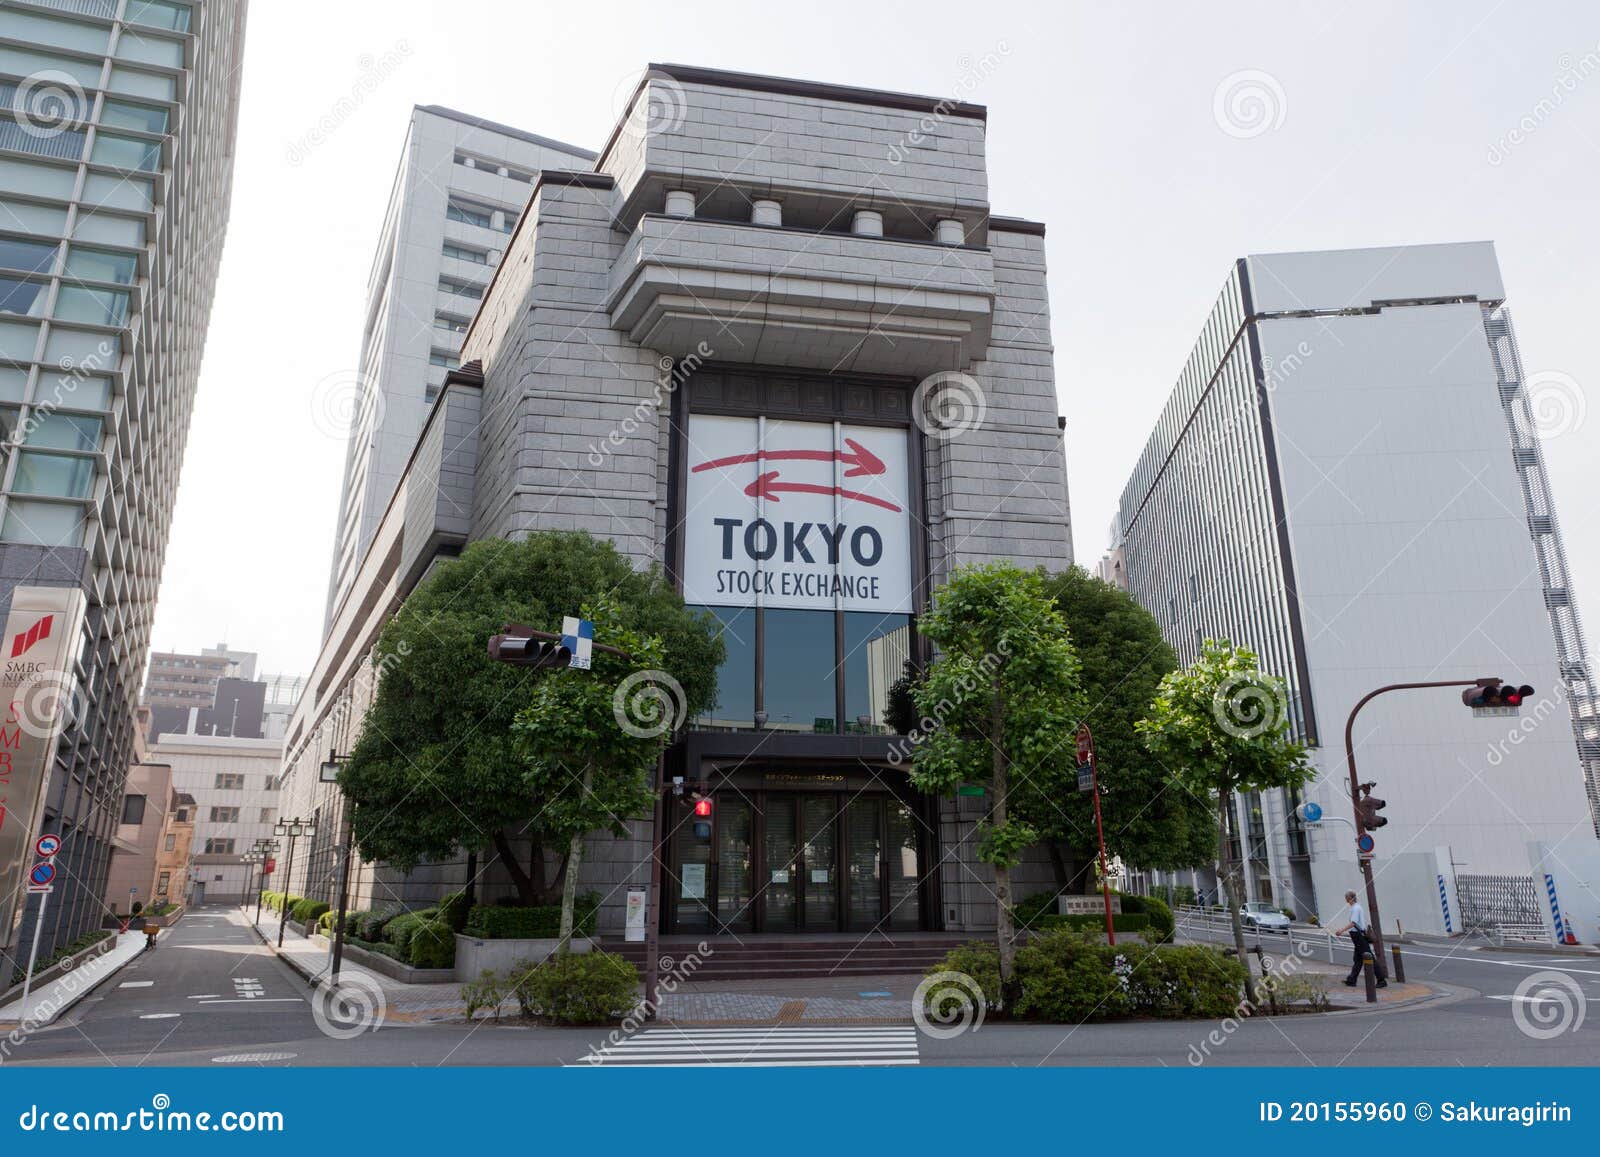 japanese stock market initials